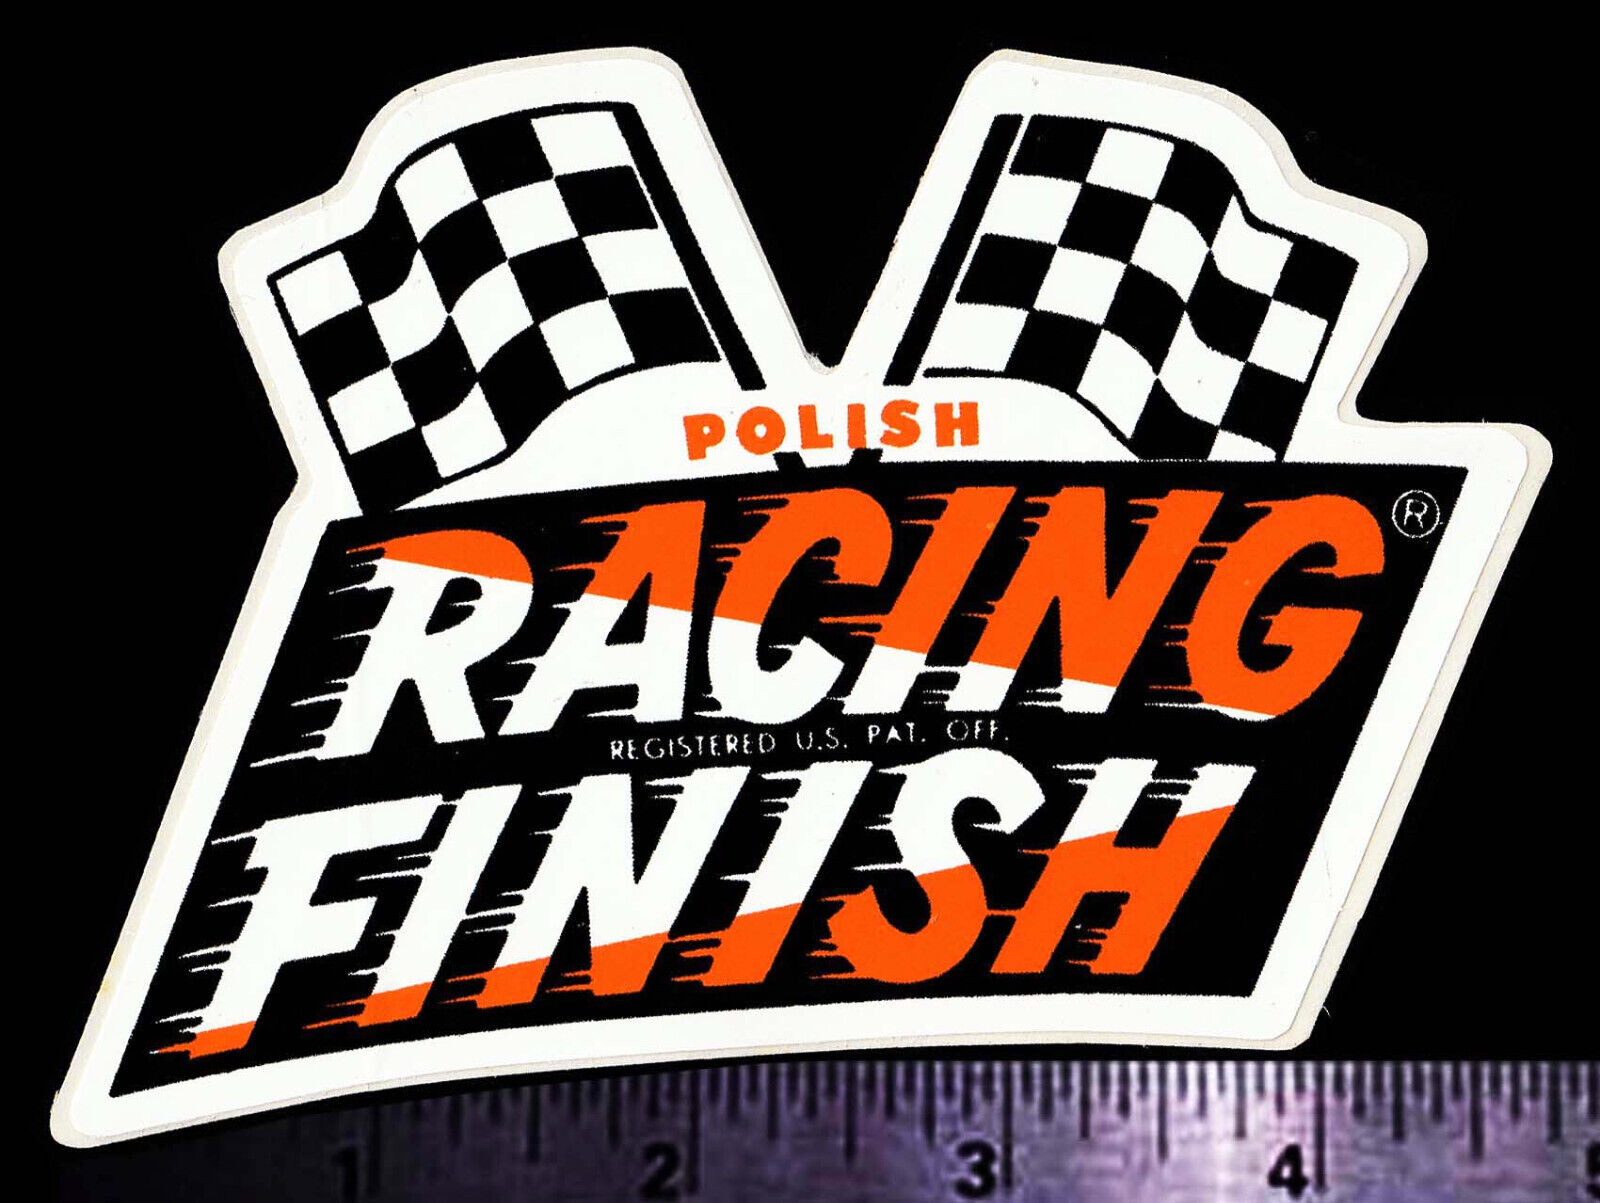 RACING FINISH Auto Polish - Detroit - Original Vintage 60’s 70's Decal/Sticker